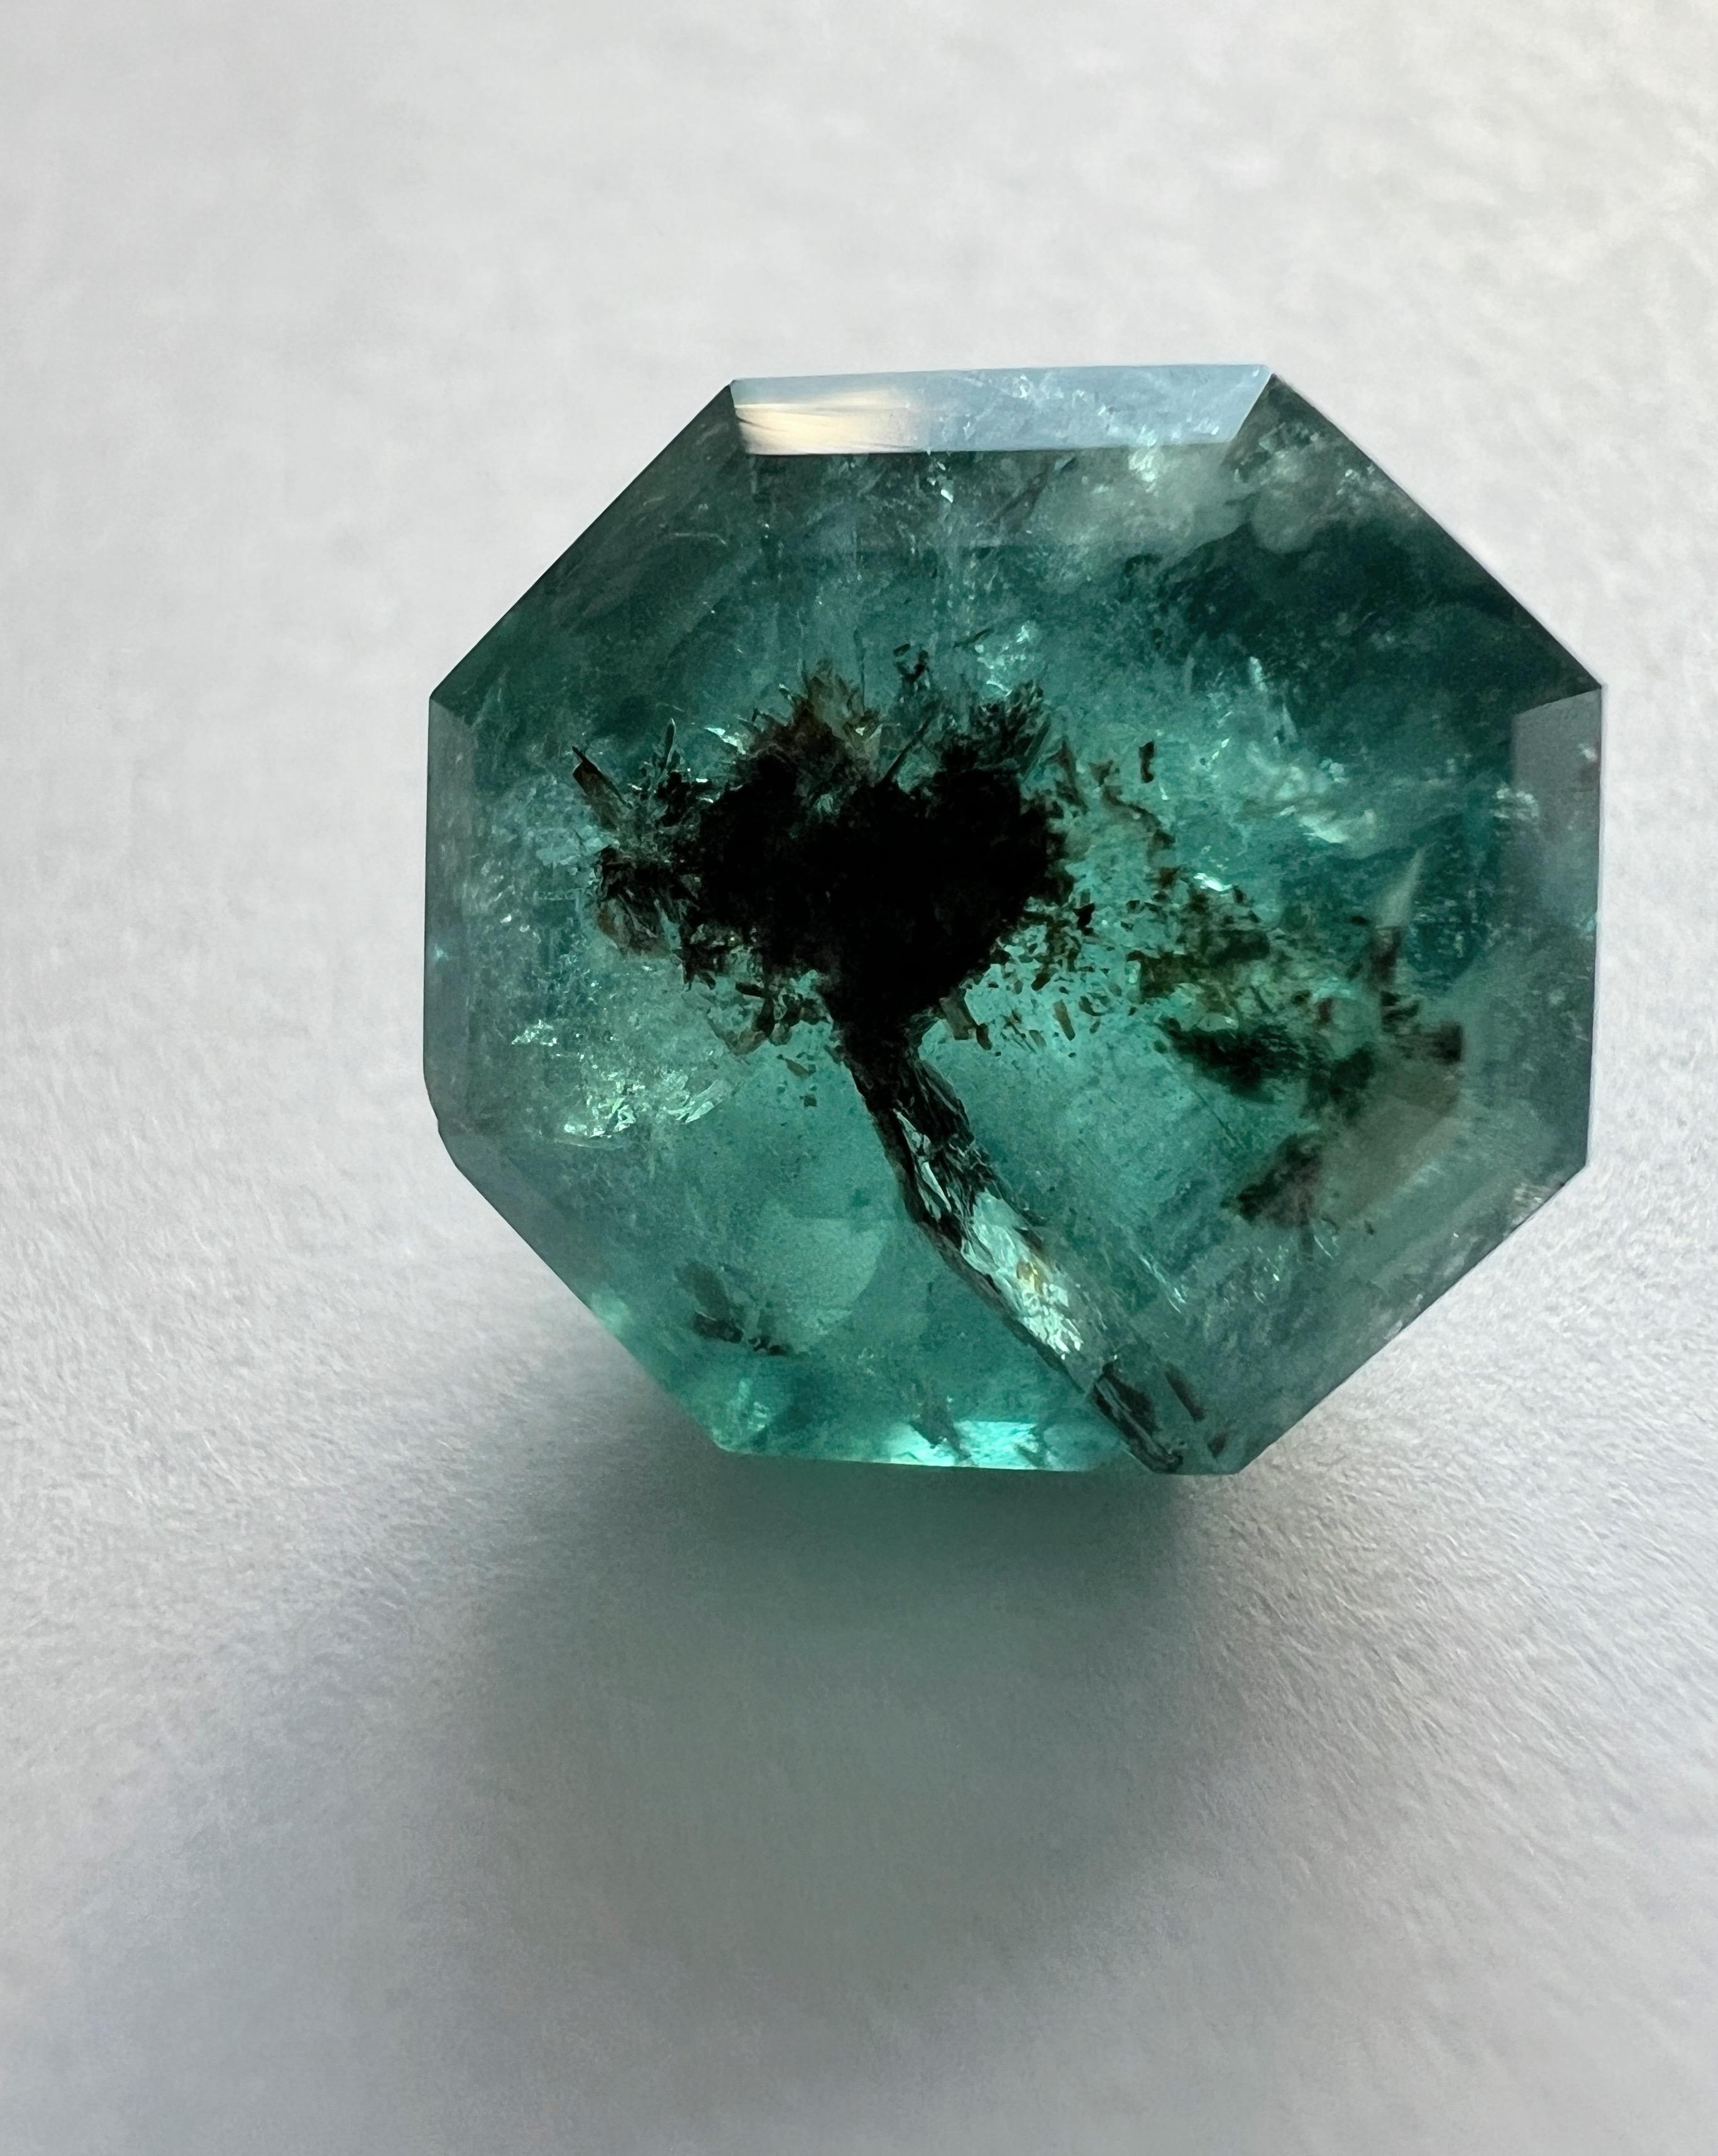 Artisan 8.85ct Asscher Cut No-Oil Natural Untreated Emerald Gemstone For Sale